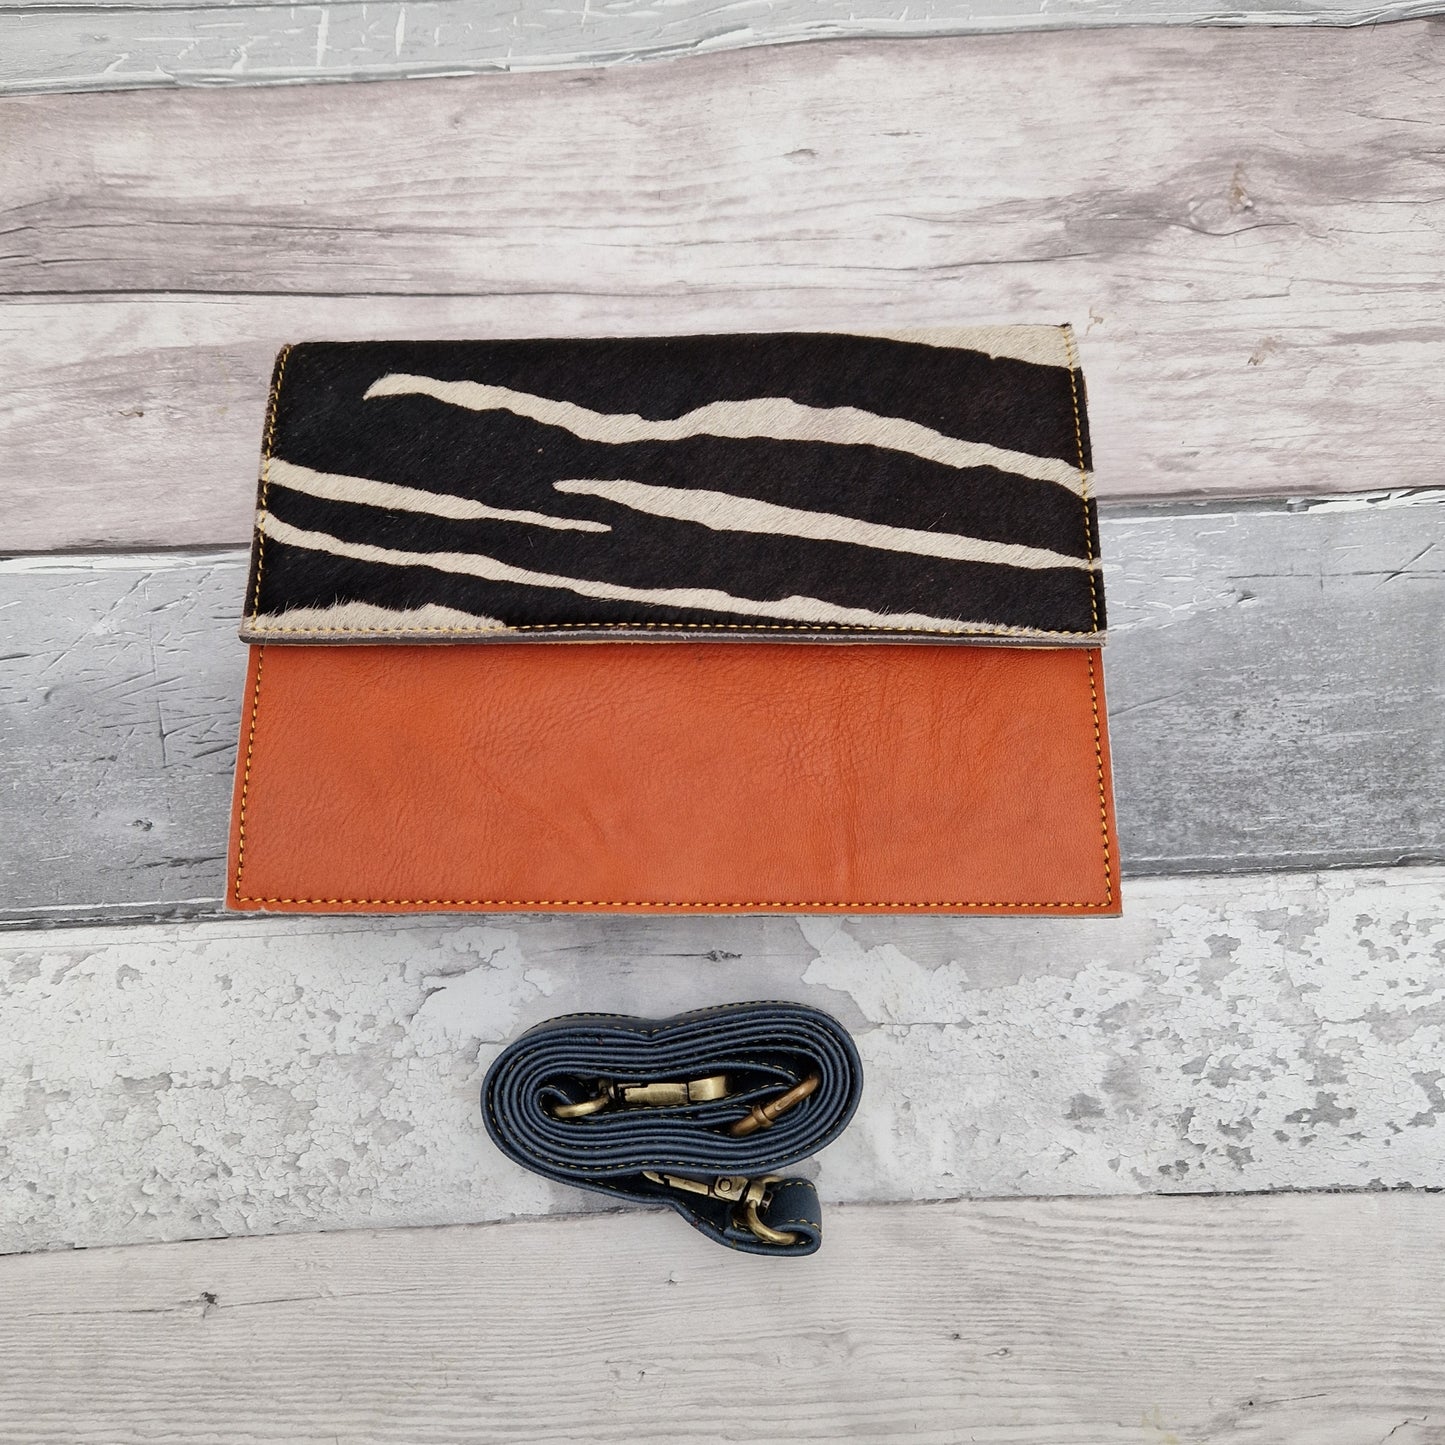 Orange Leather Handbag with a Zebra Print Panel.